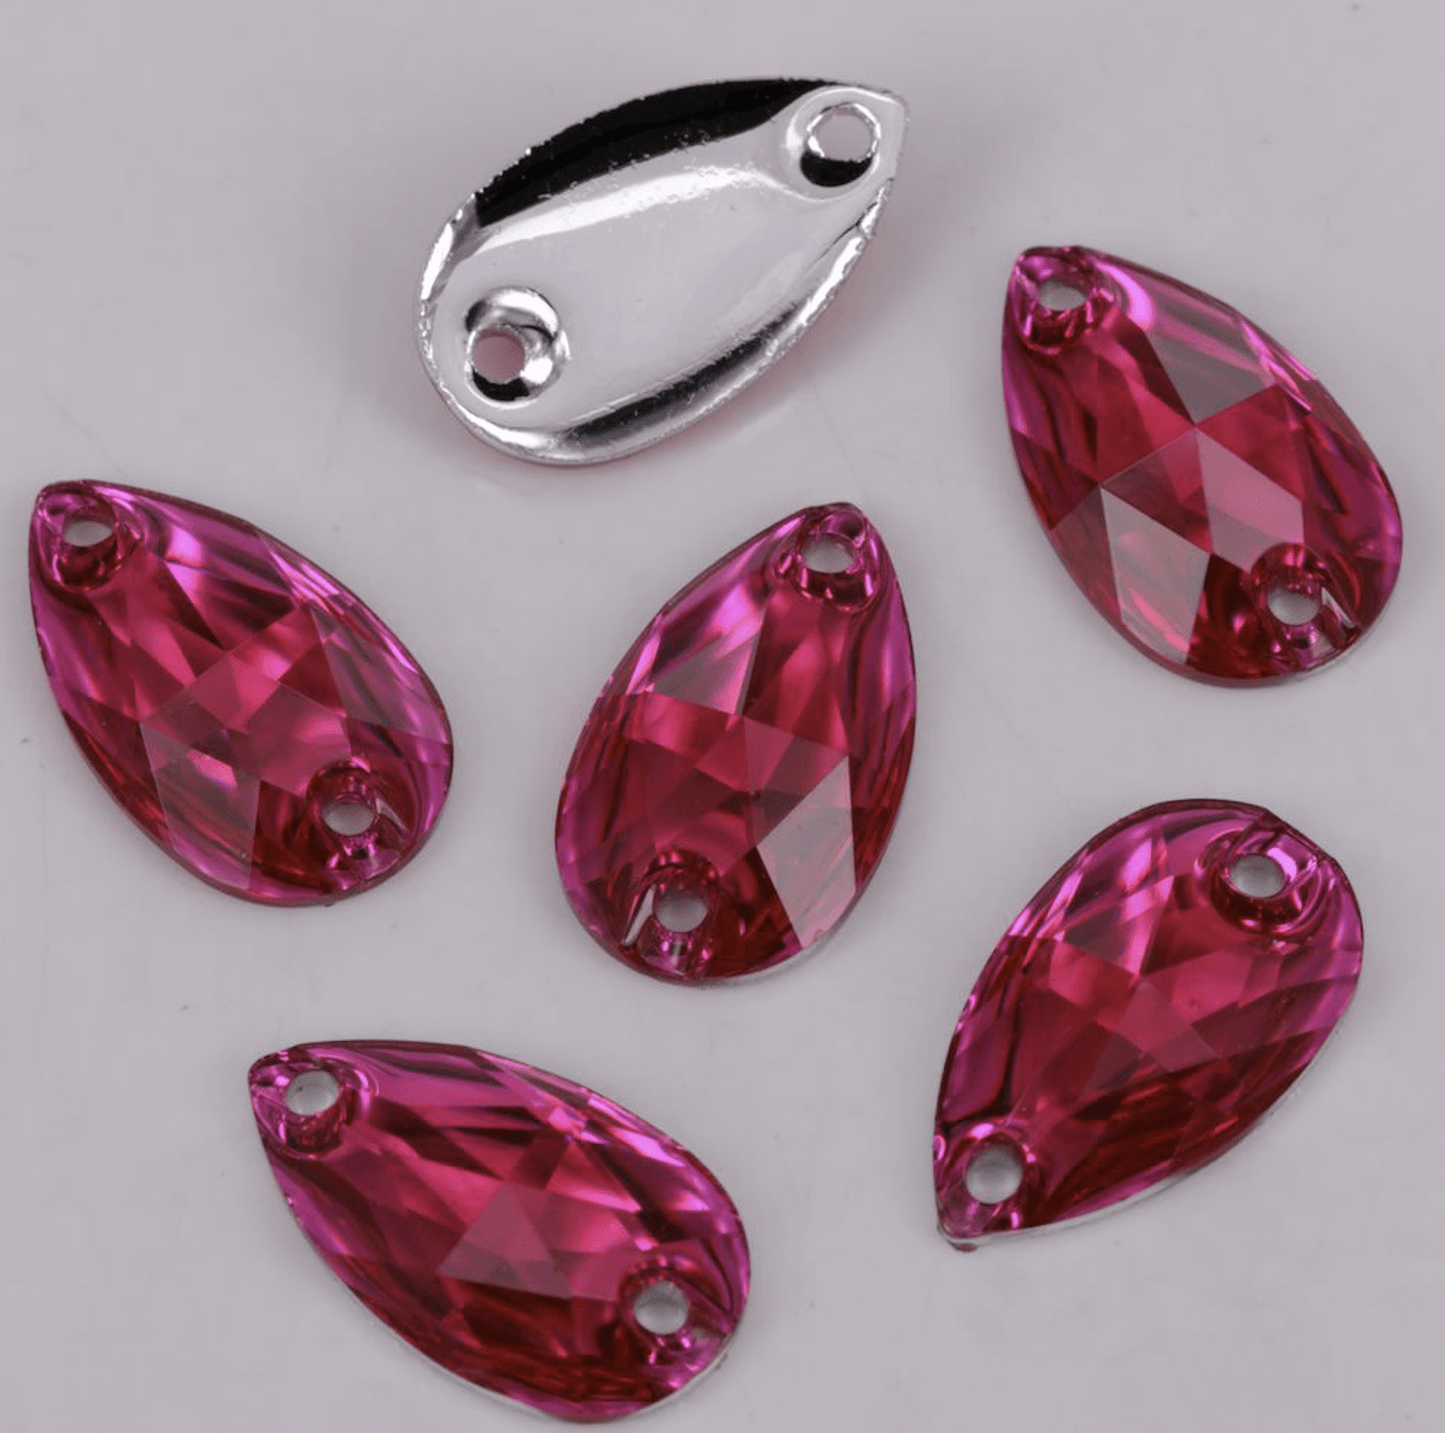 Sundaylace Creations & Bling Resin Gems Hot Pink 10*18mm Mulit-colour Teardrop, Sew on, Resin Gem